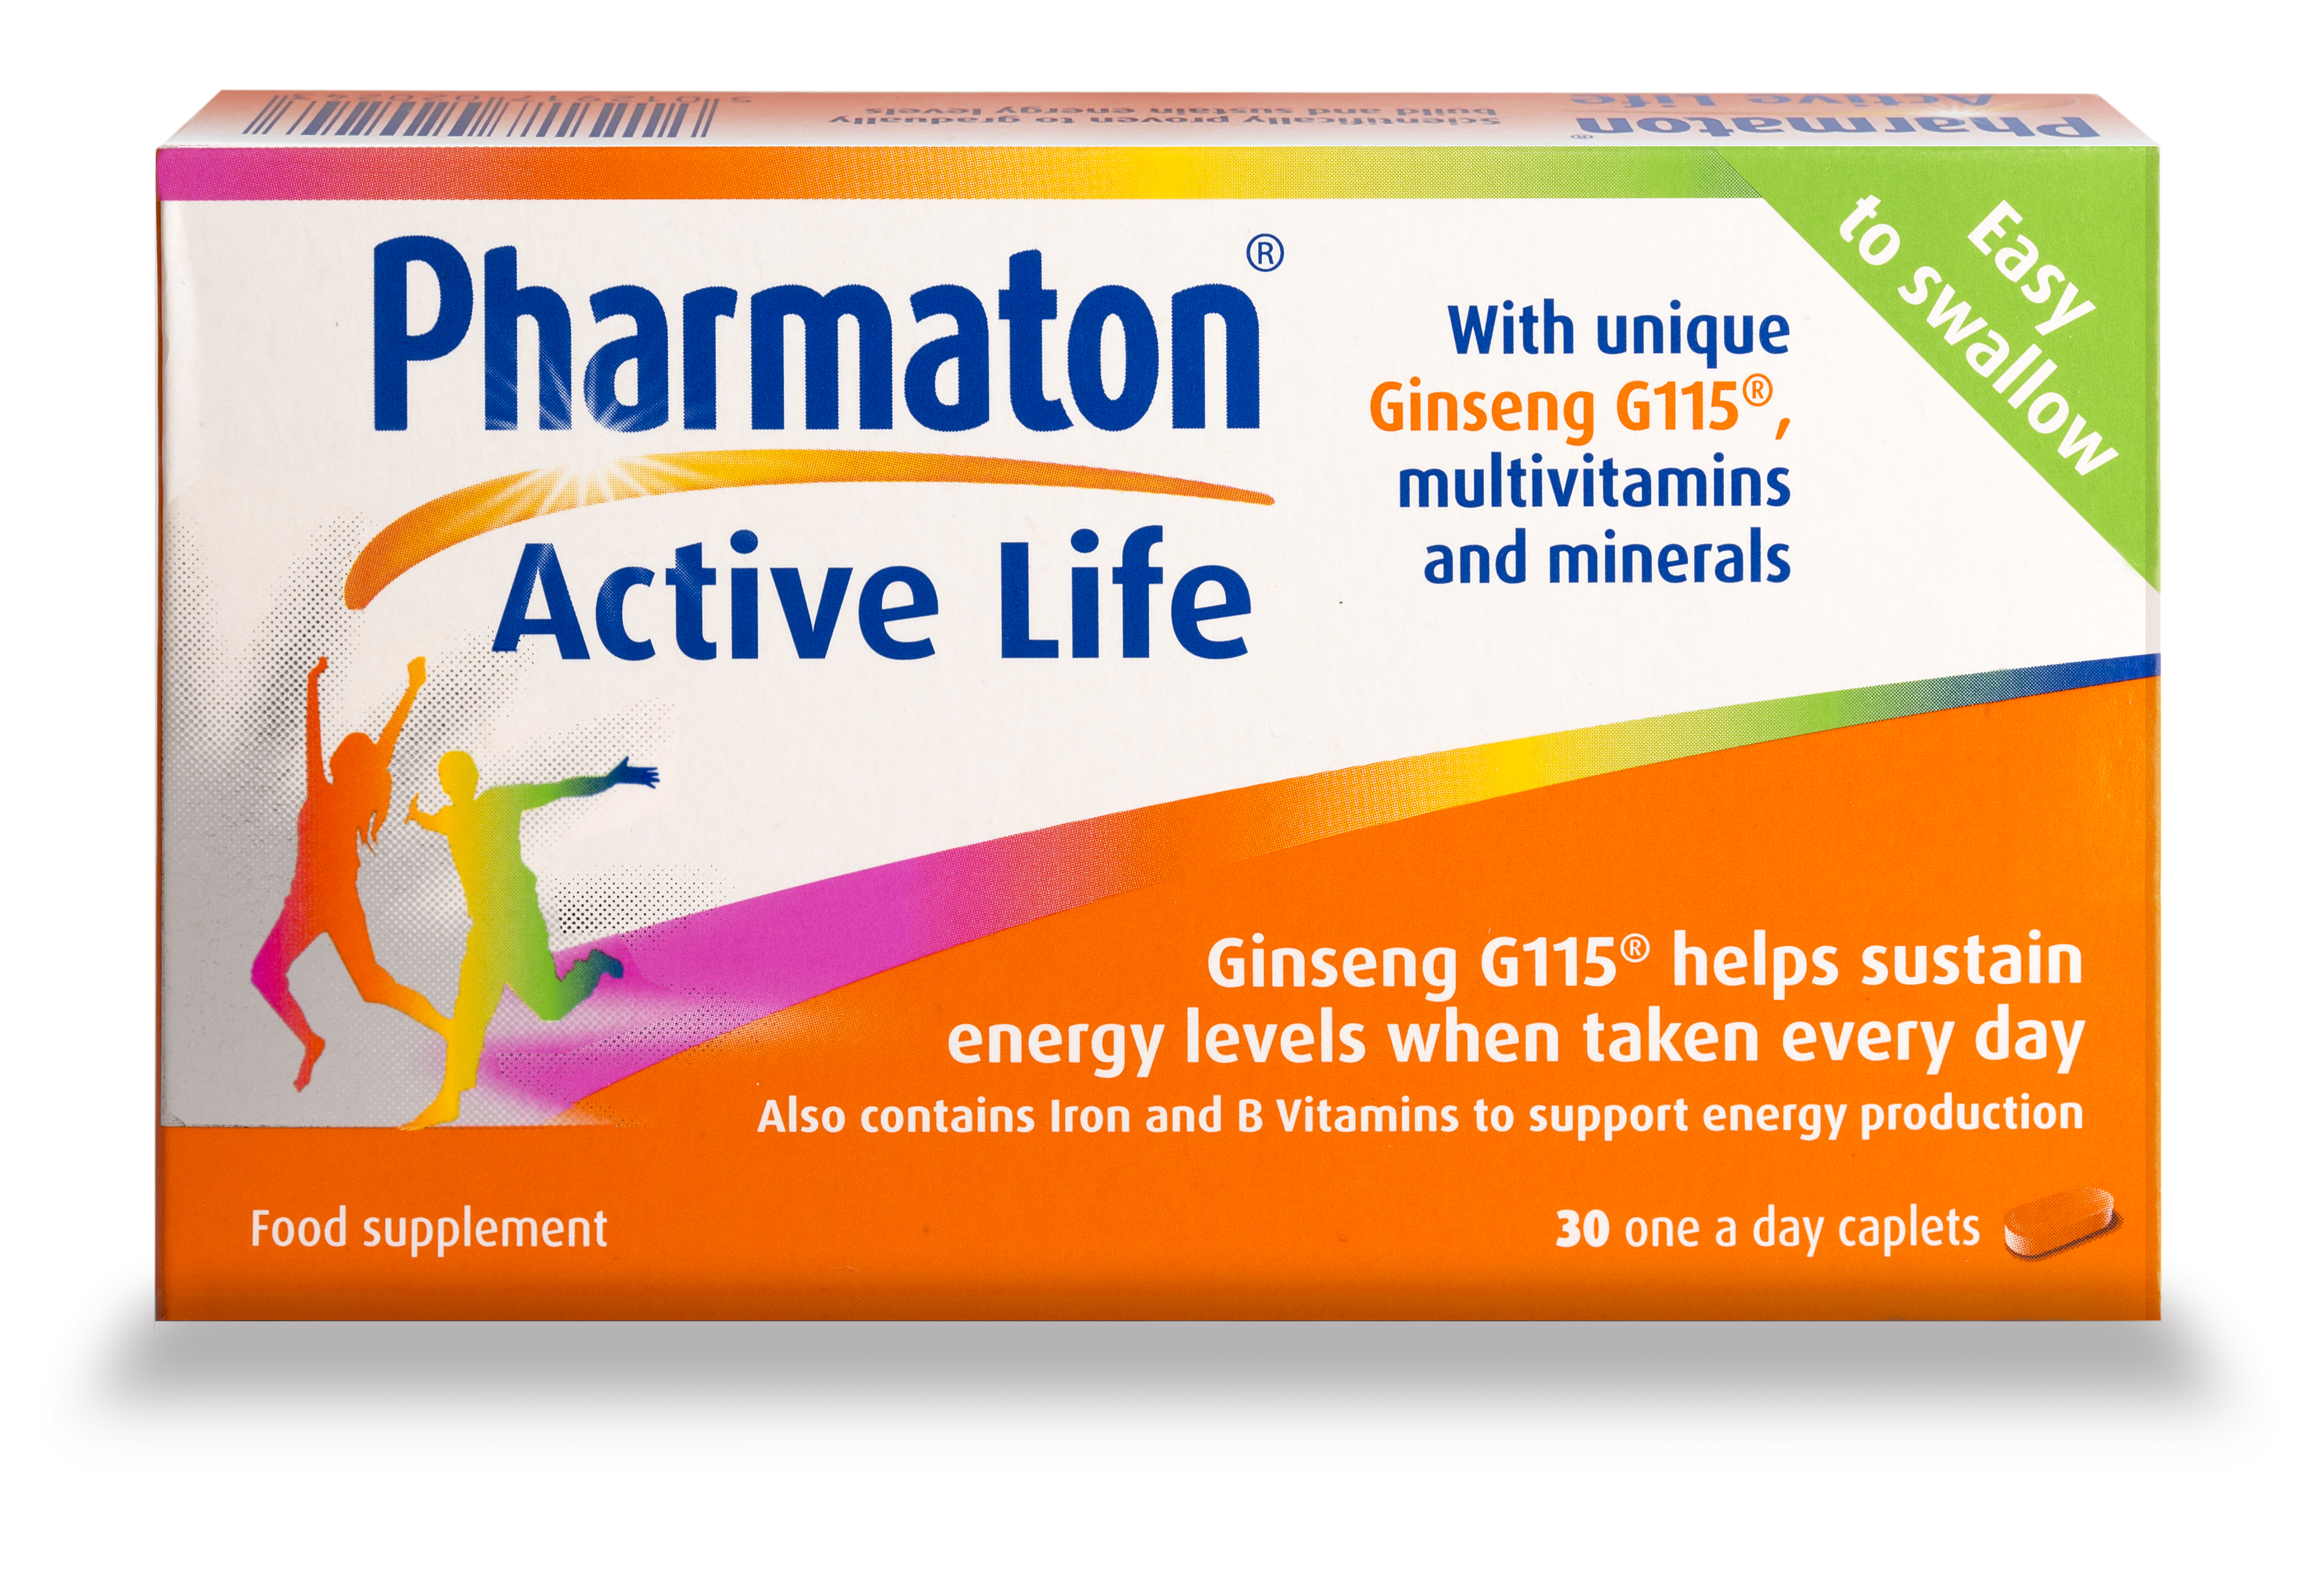 Life is active. Pharmaton logo. Актив лайф витамины. Pharmaton витамины food Supplement. Мультивитамины Active.